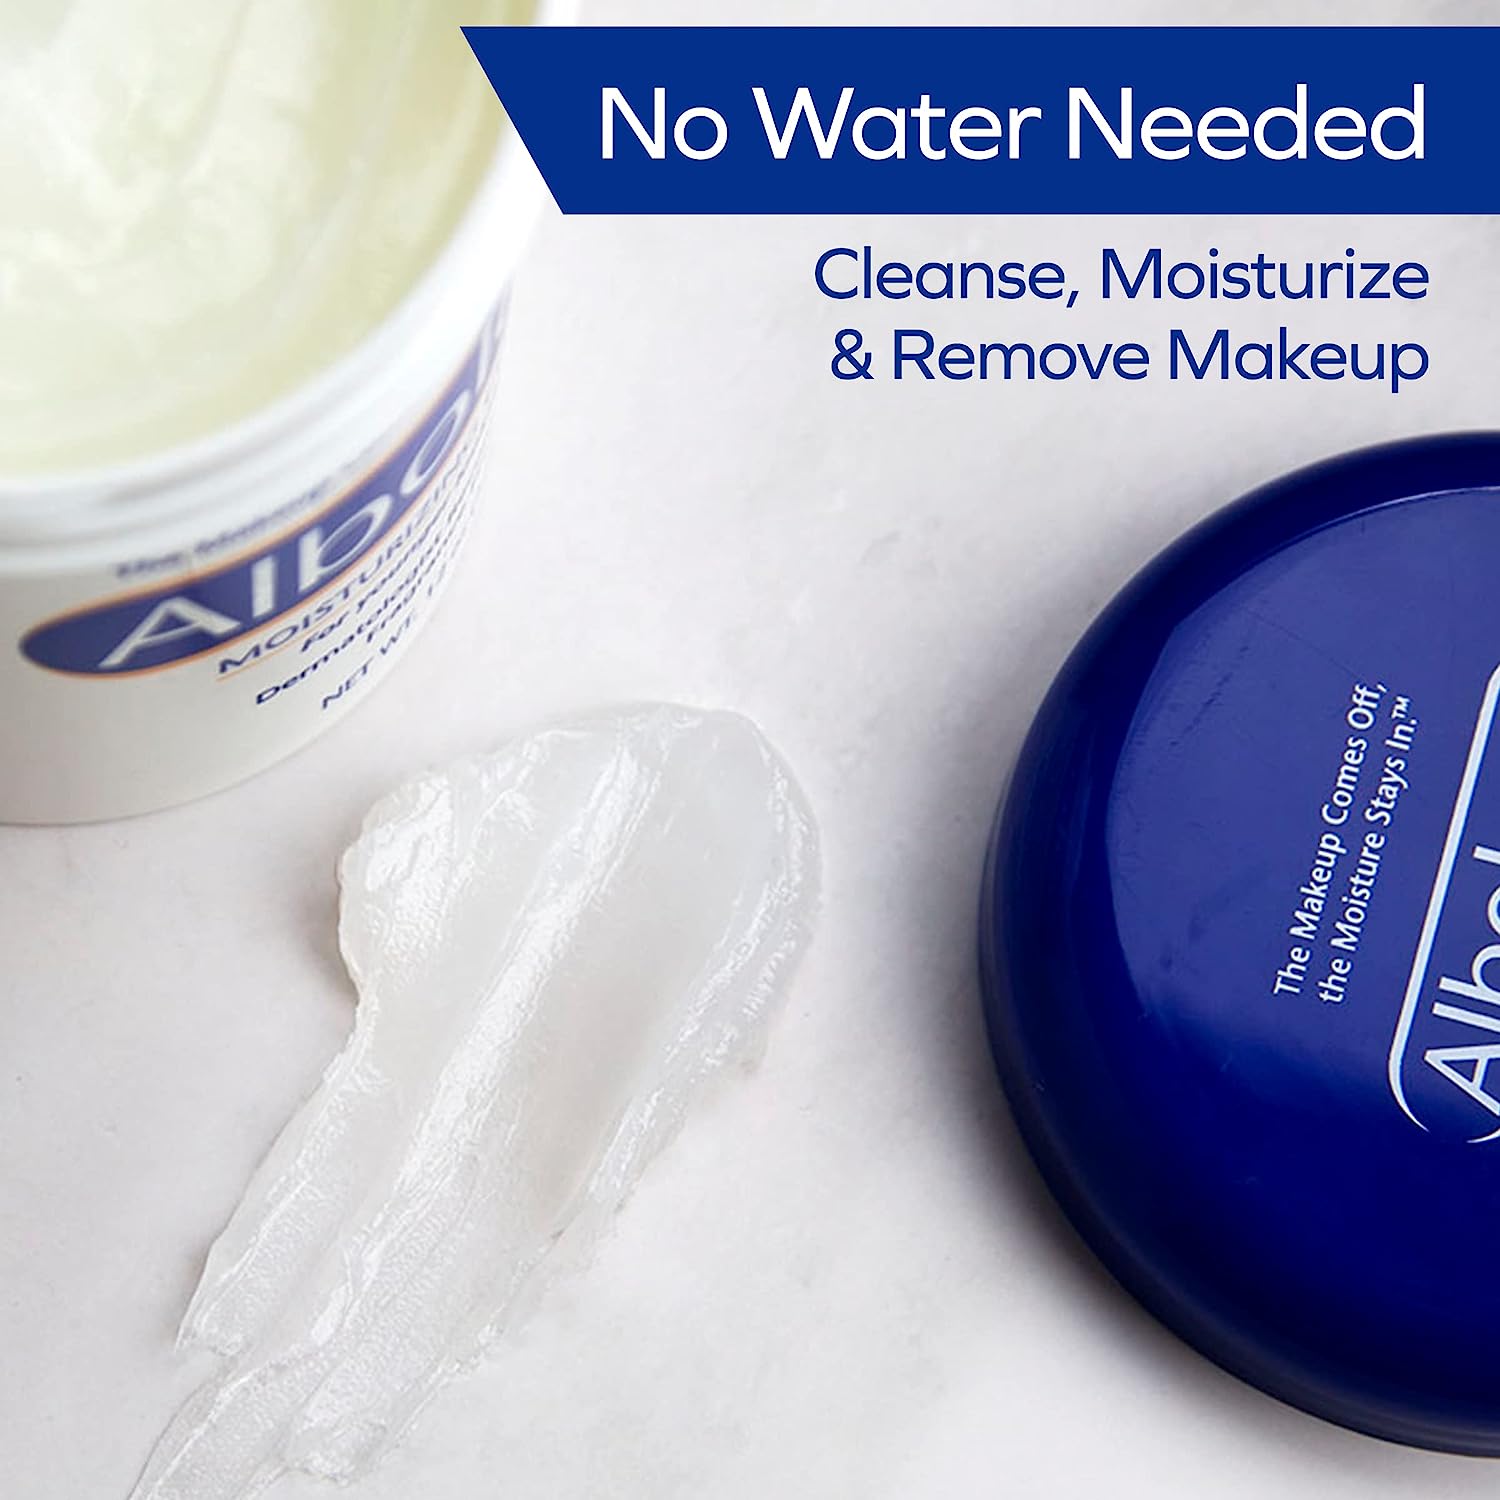 Albolene Face Moisturizer and Makeup Remover, Facial Cleanser and Cleansing Balm, Beta Carotene Fragrance Free Cream, 12 oz